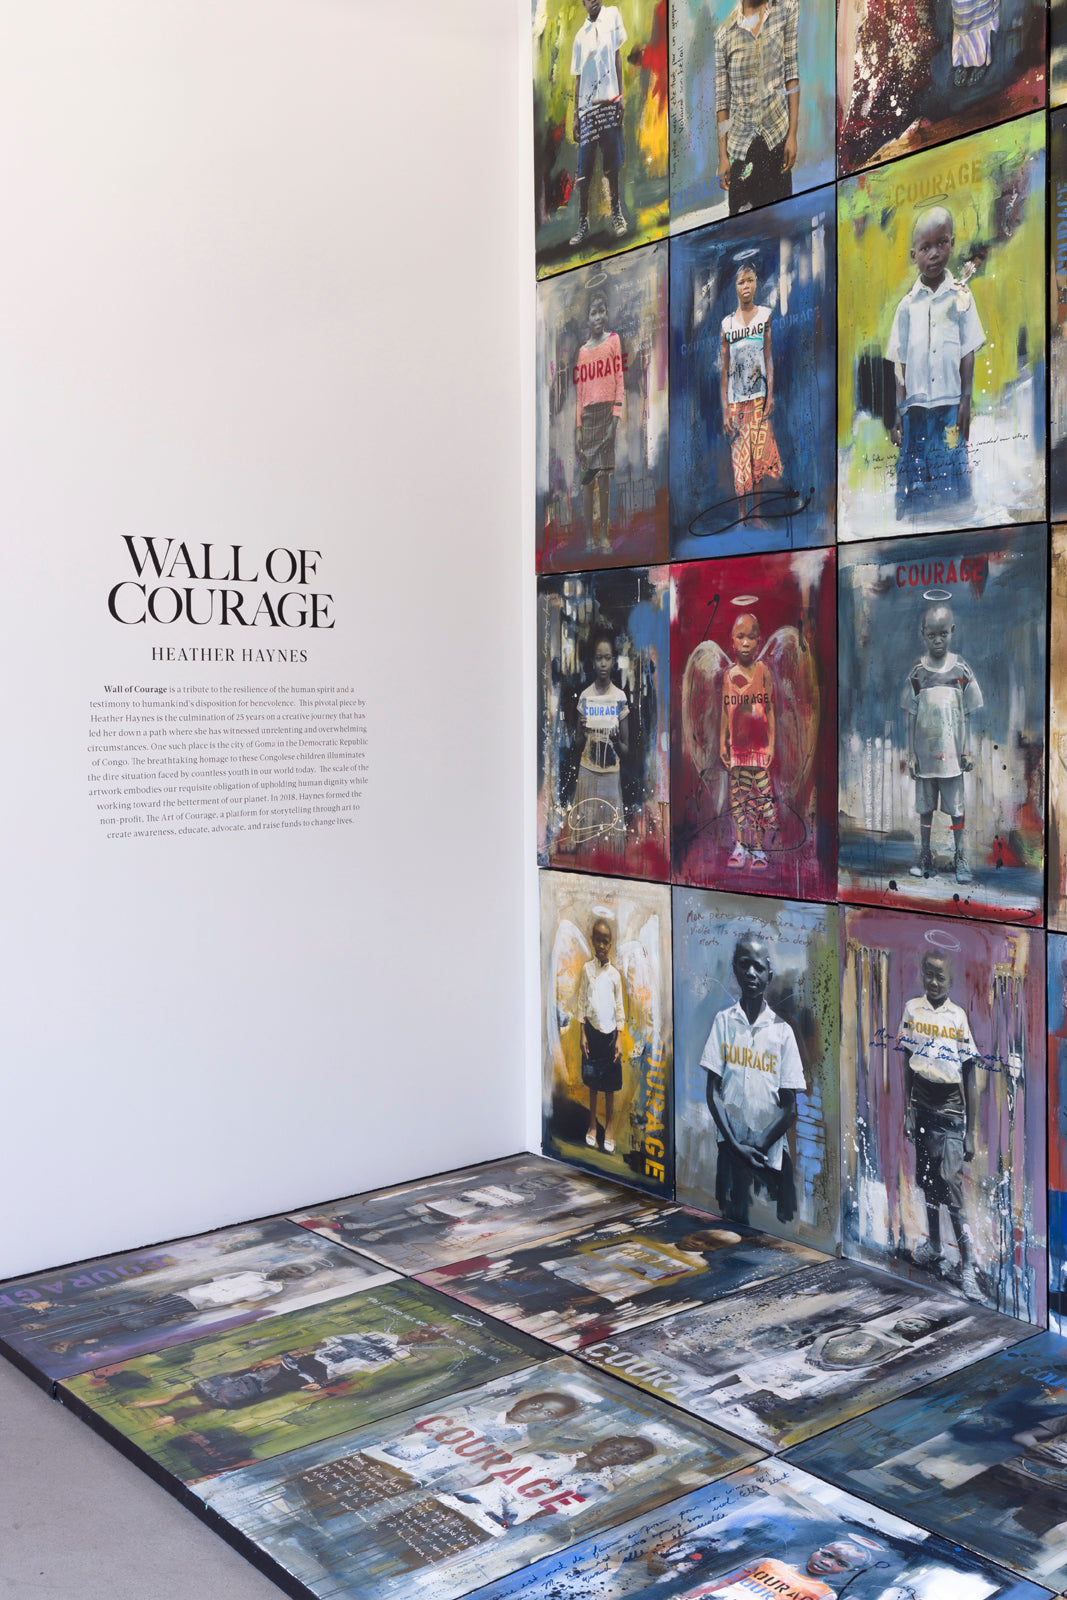 Wall of Courage: Azaf